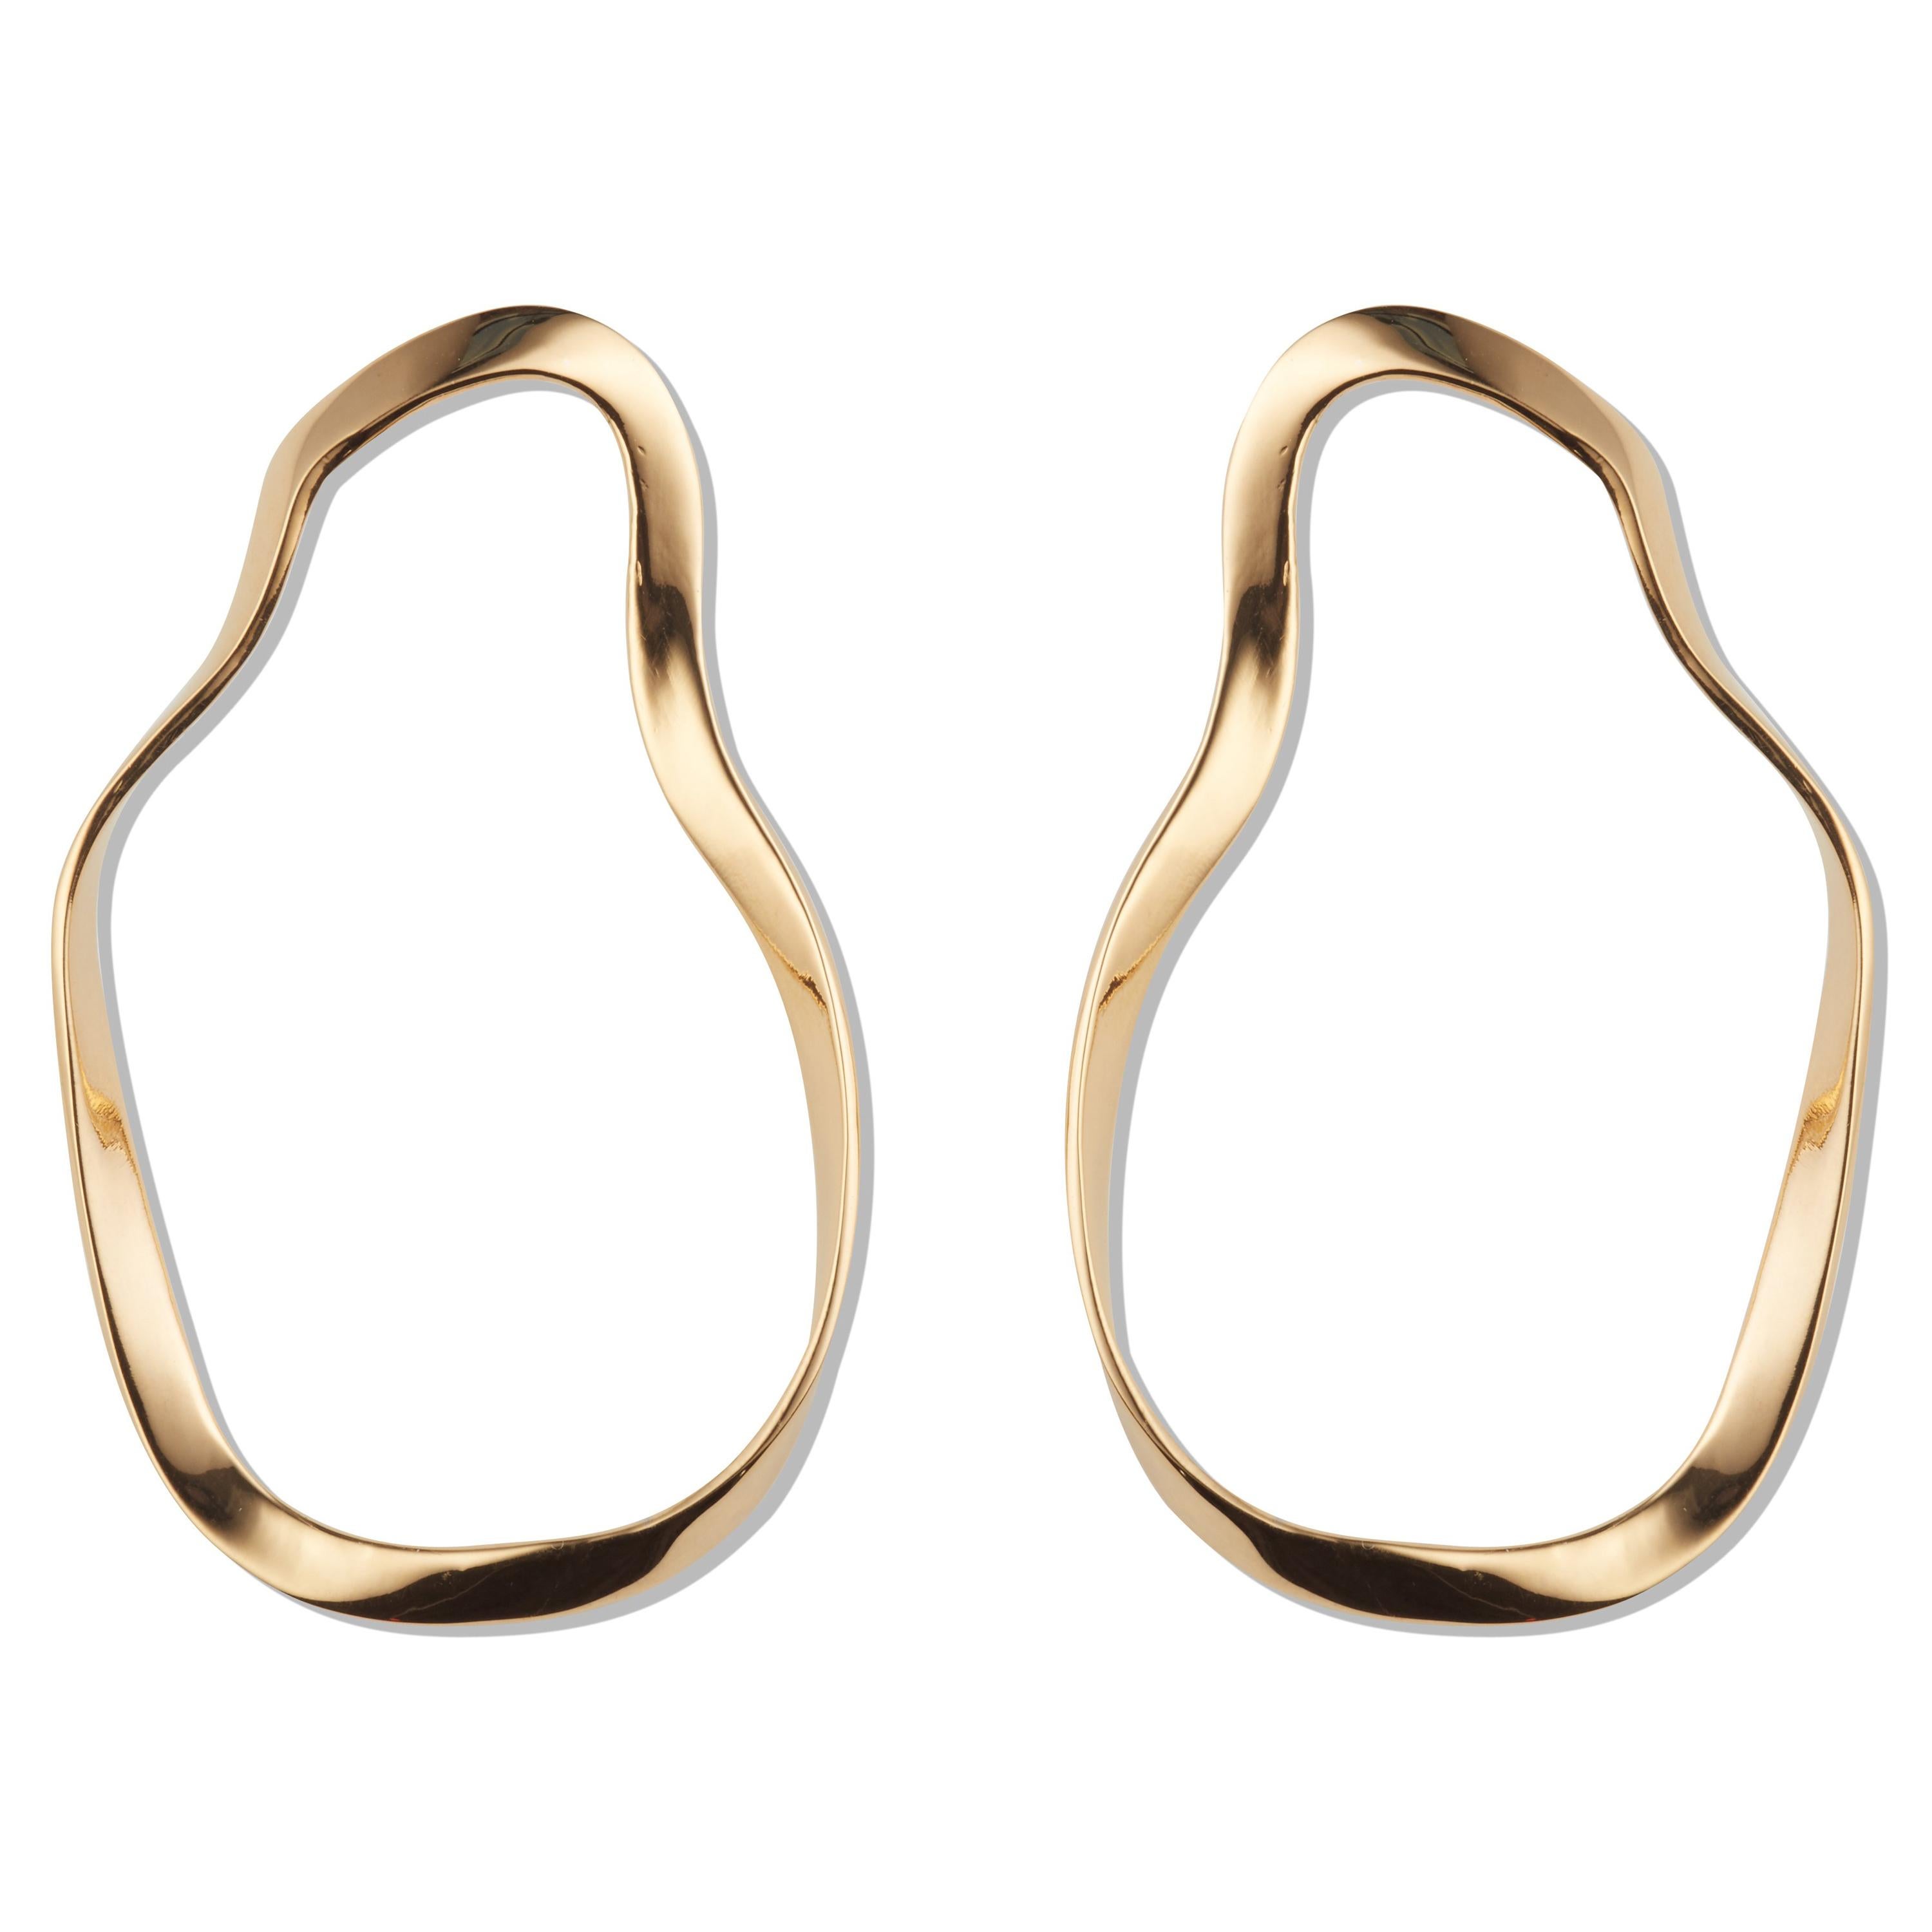 AGMES Unique Gold Vermeil Circular Organic Form Large Earrings